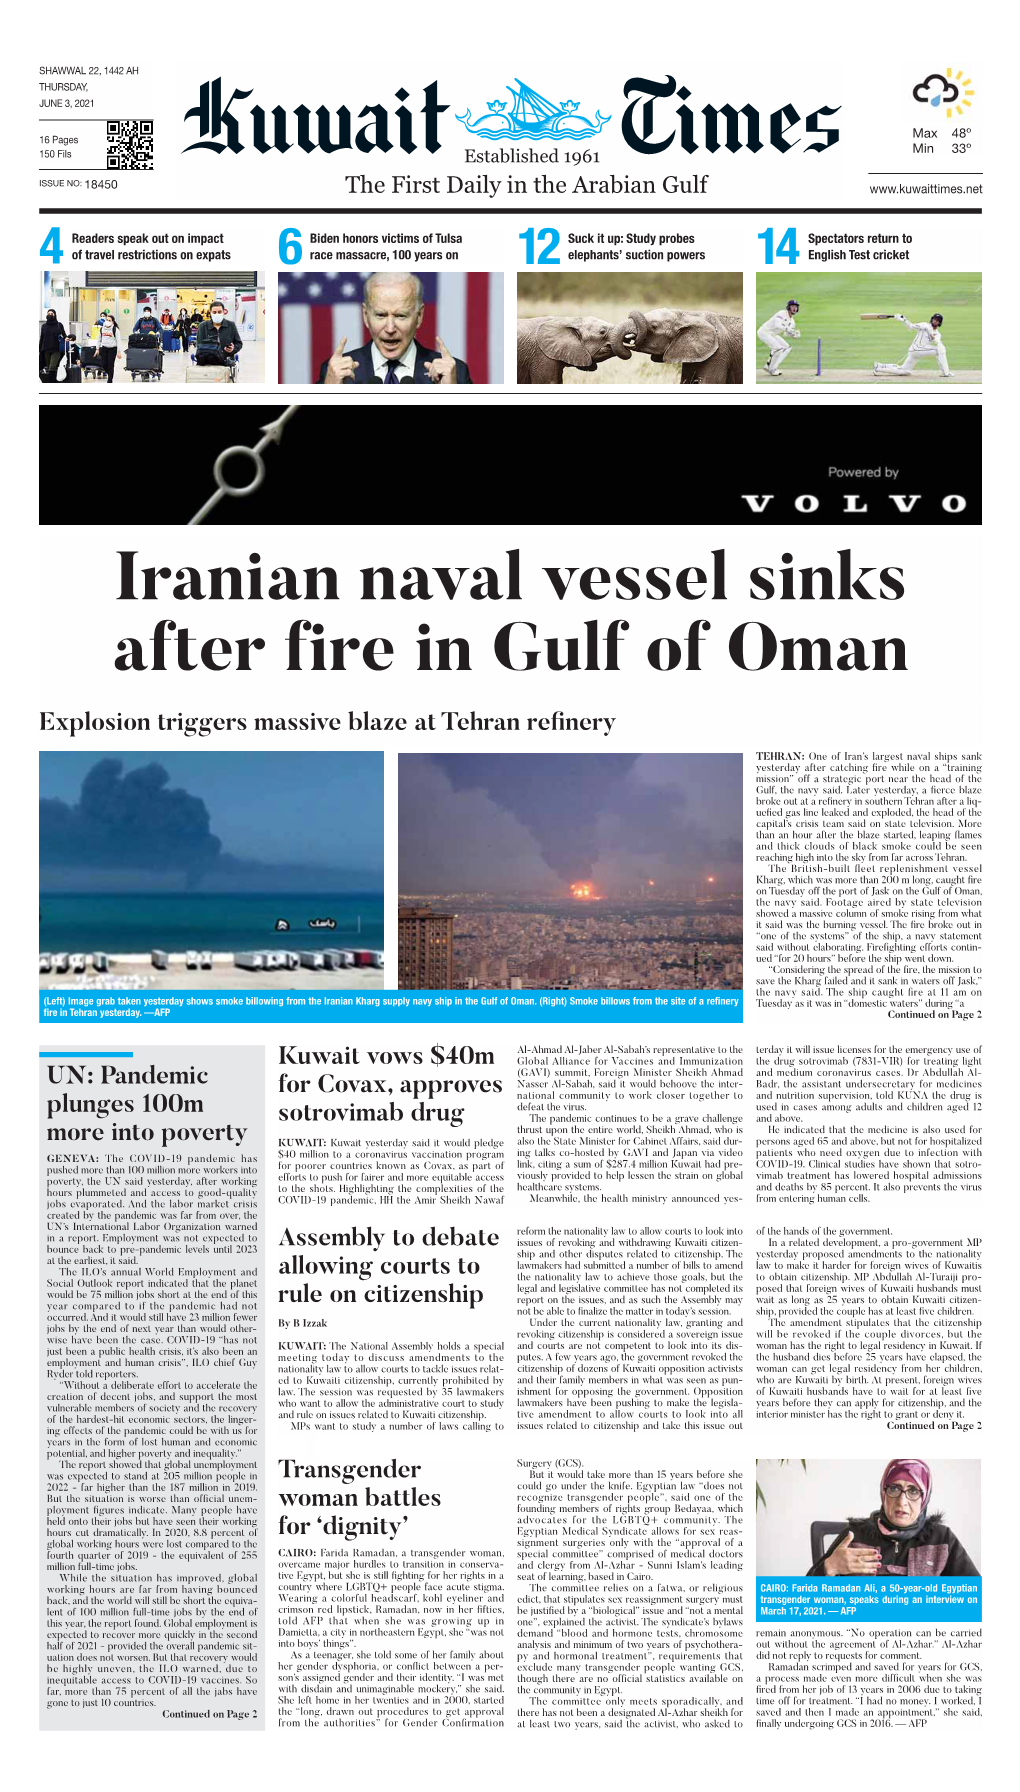 Iranian Naval Vessel Sinks After Fire in Gulf of Oman